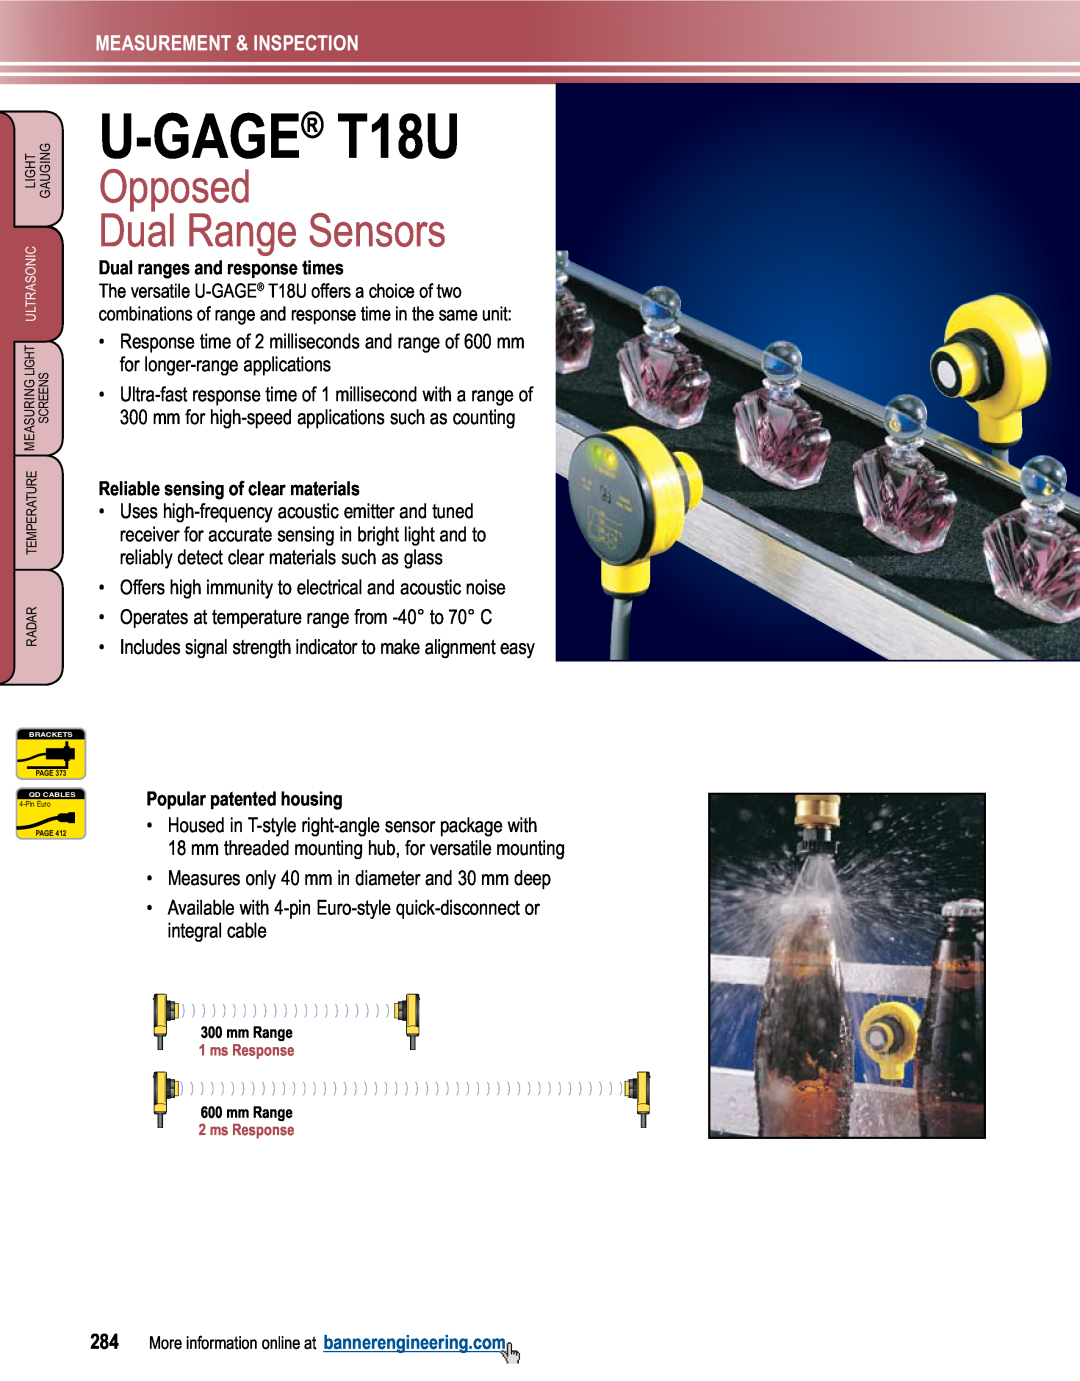 Banner L-GAGE manual U-GAGE T18U, Opposed Dual Range Sensors, Measurement & Inspection 